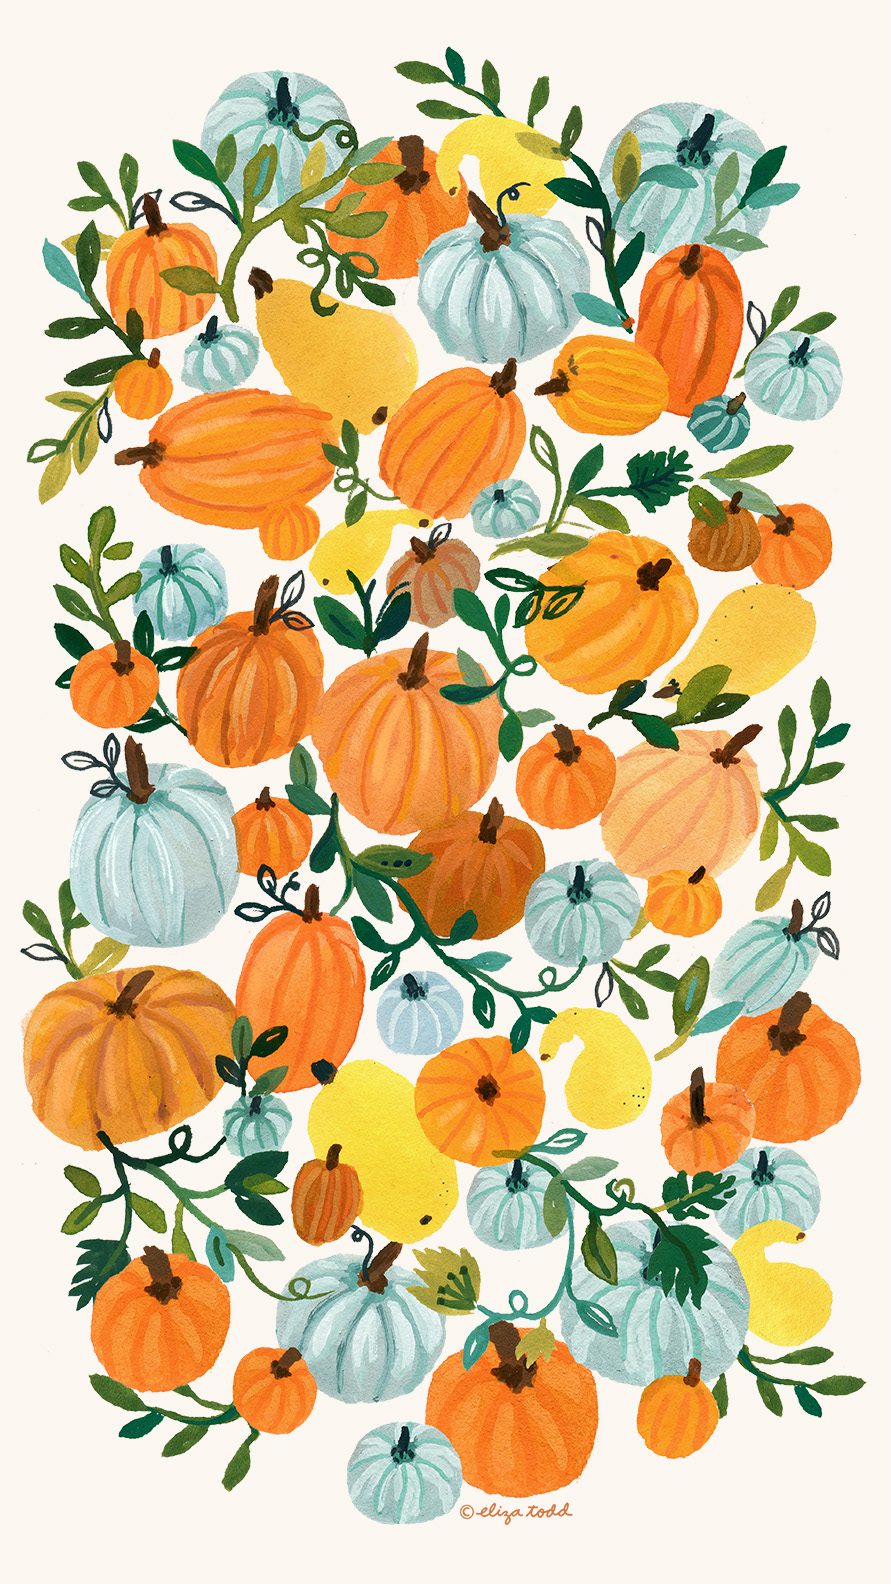 Printable iPhone Wallpaper: Autumn Pumpkins